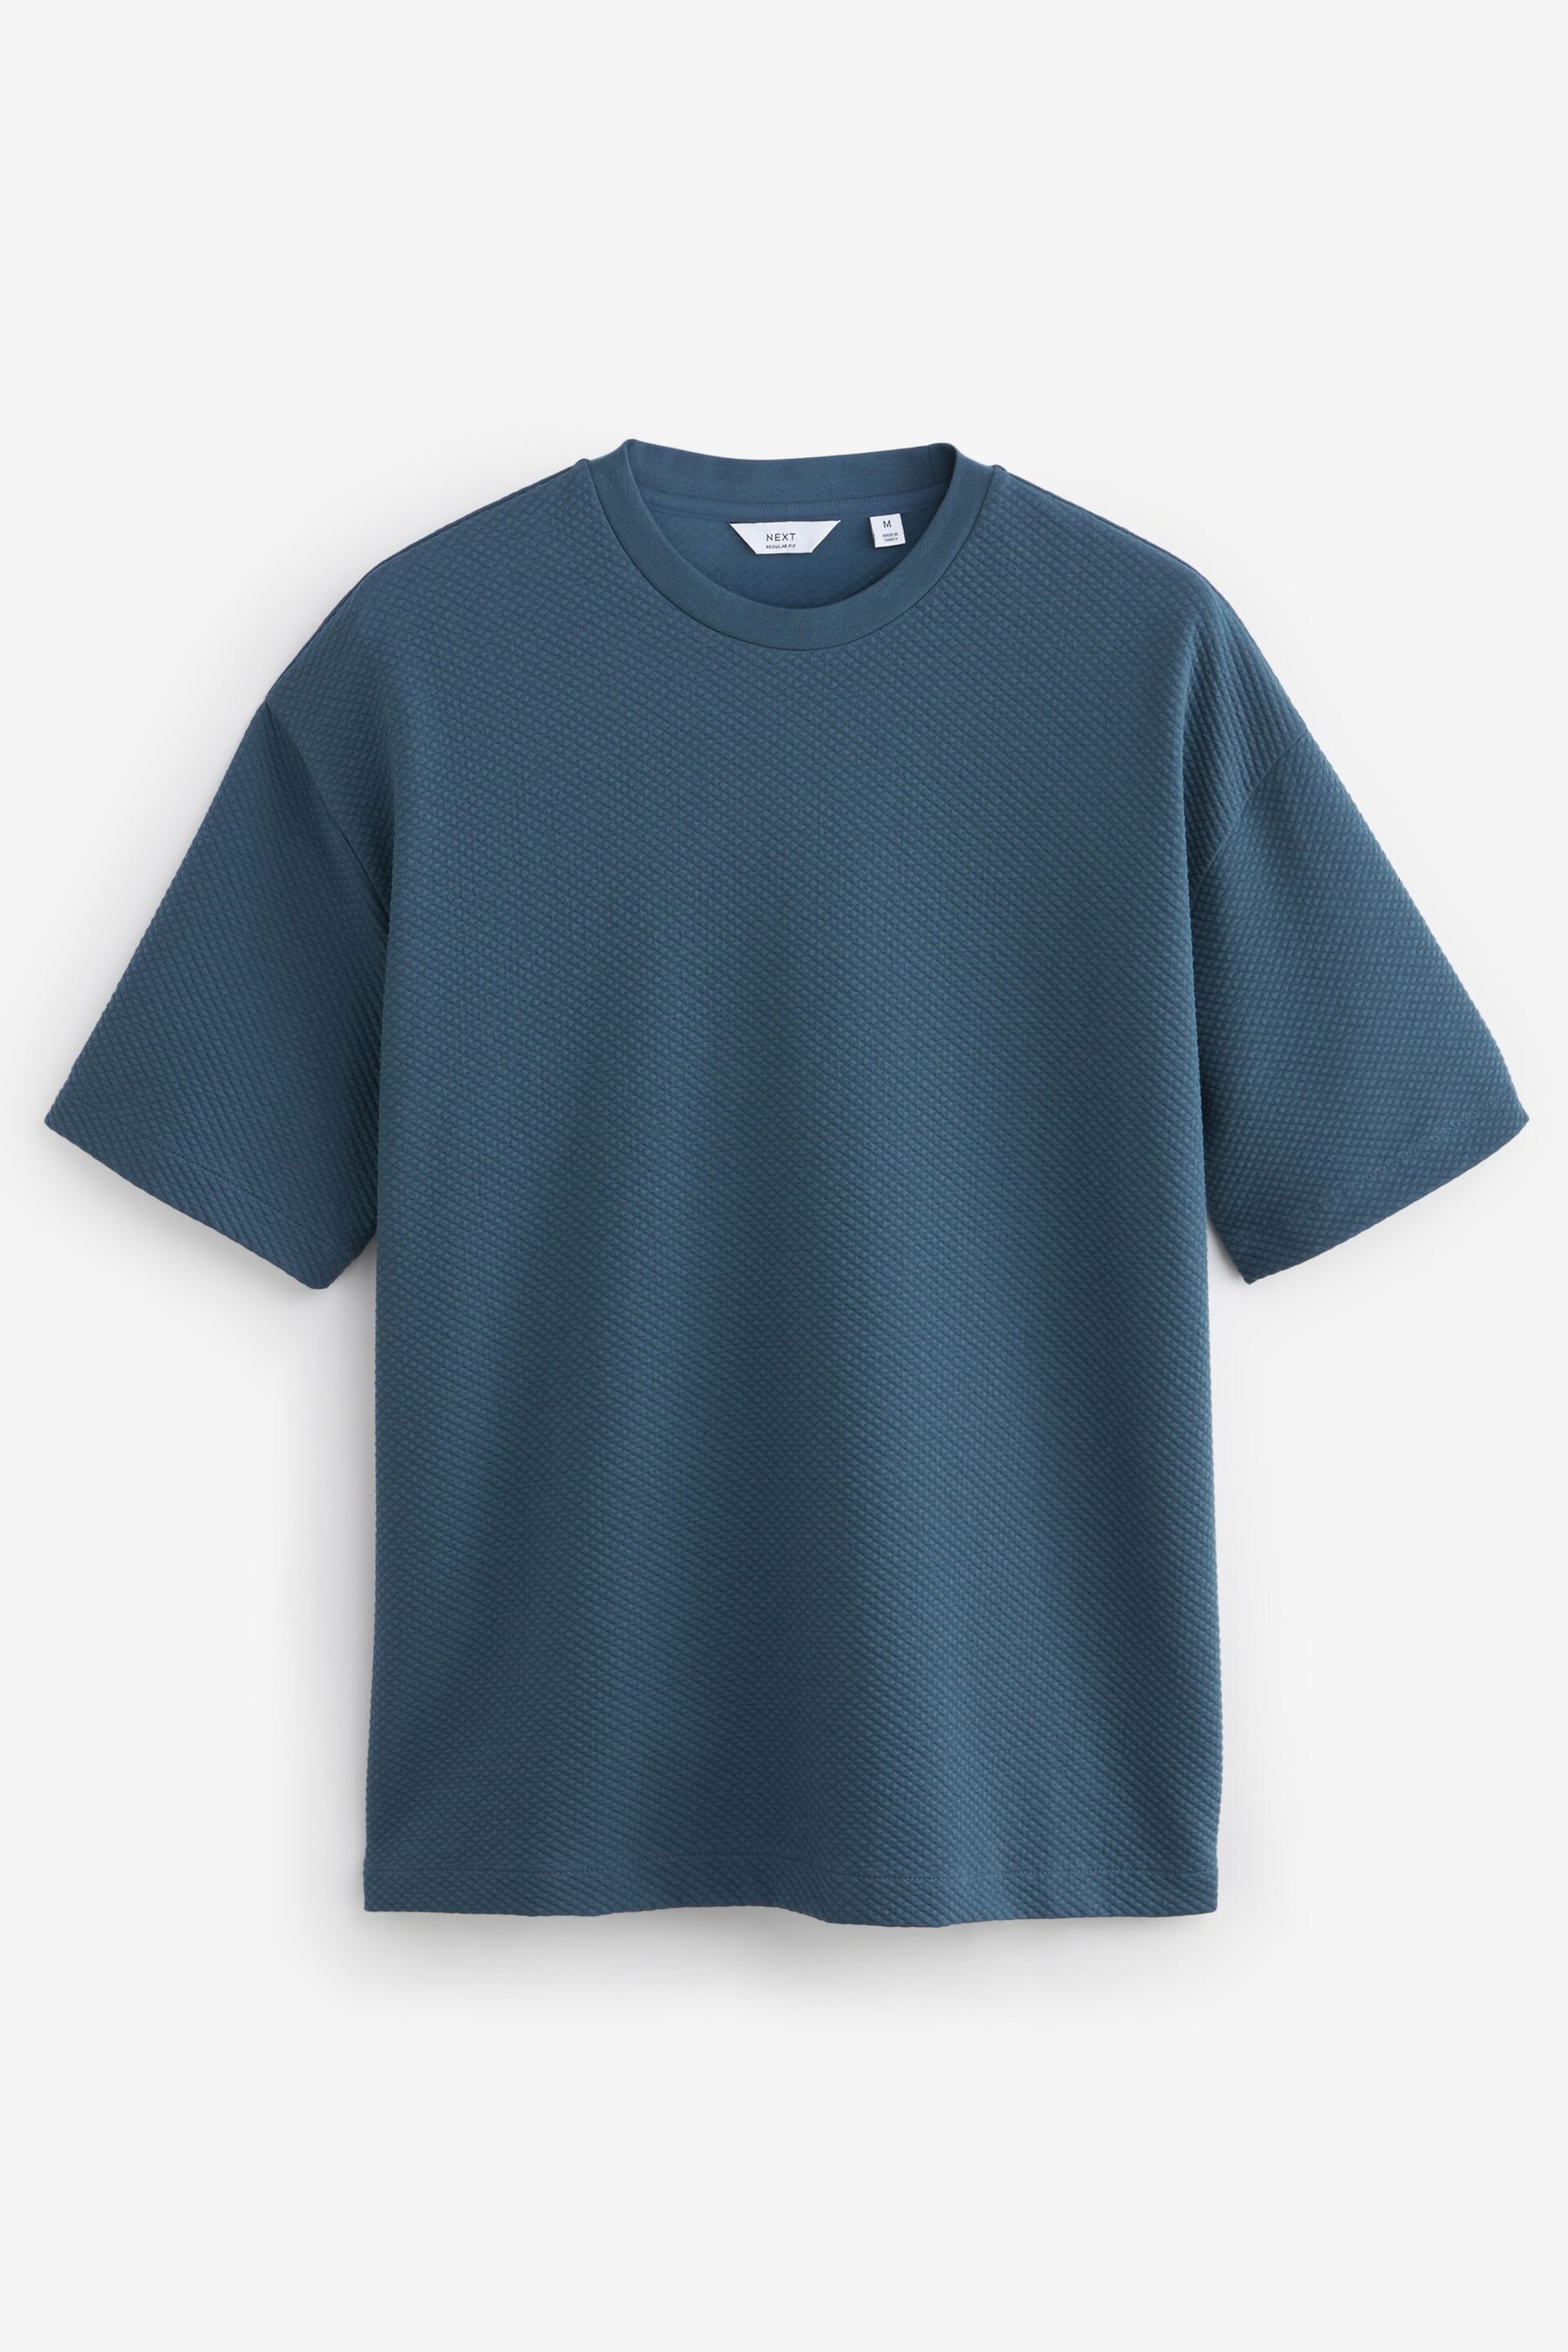 Navy Diamond Textured T-Shirt - Image 5 of 7